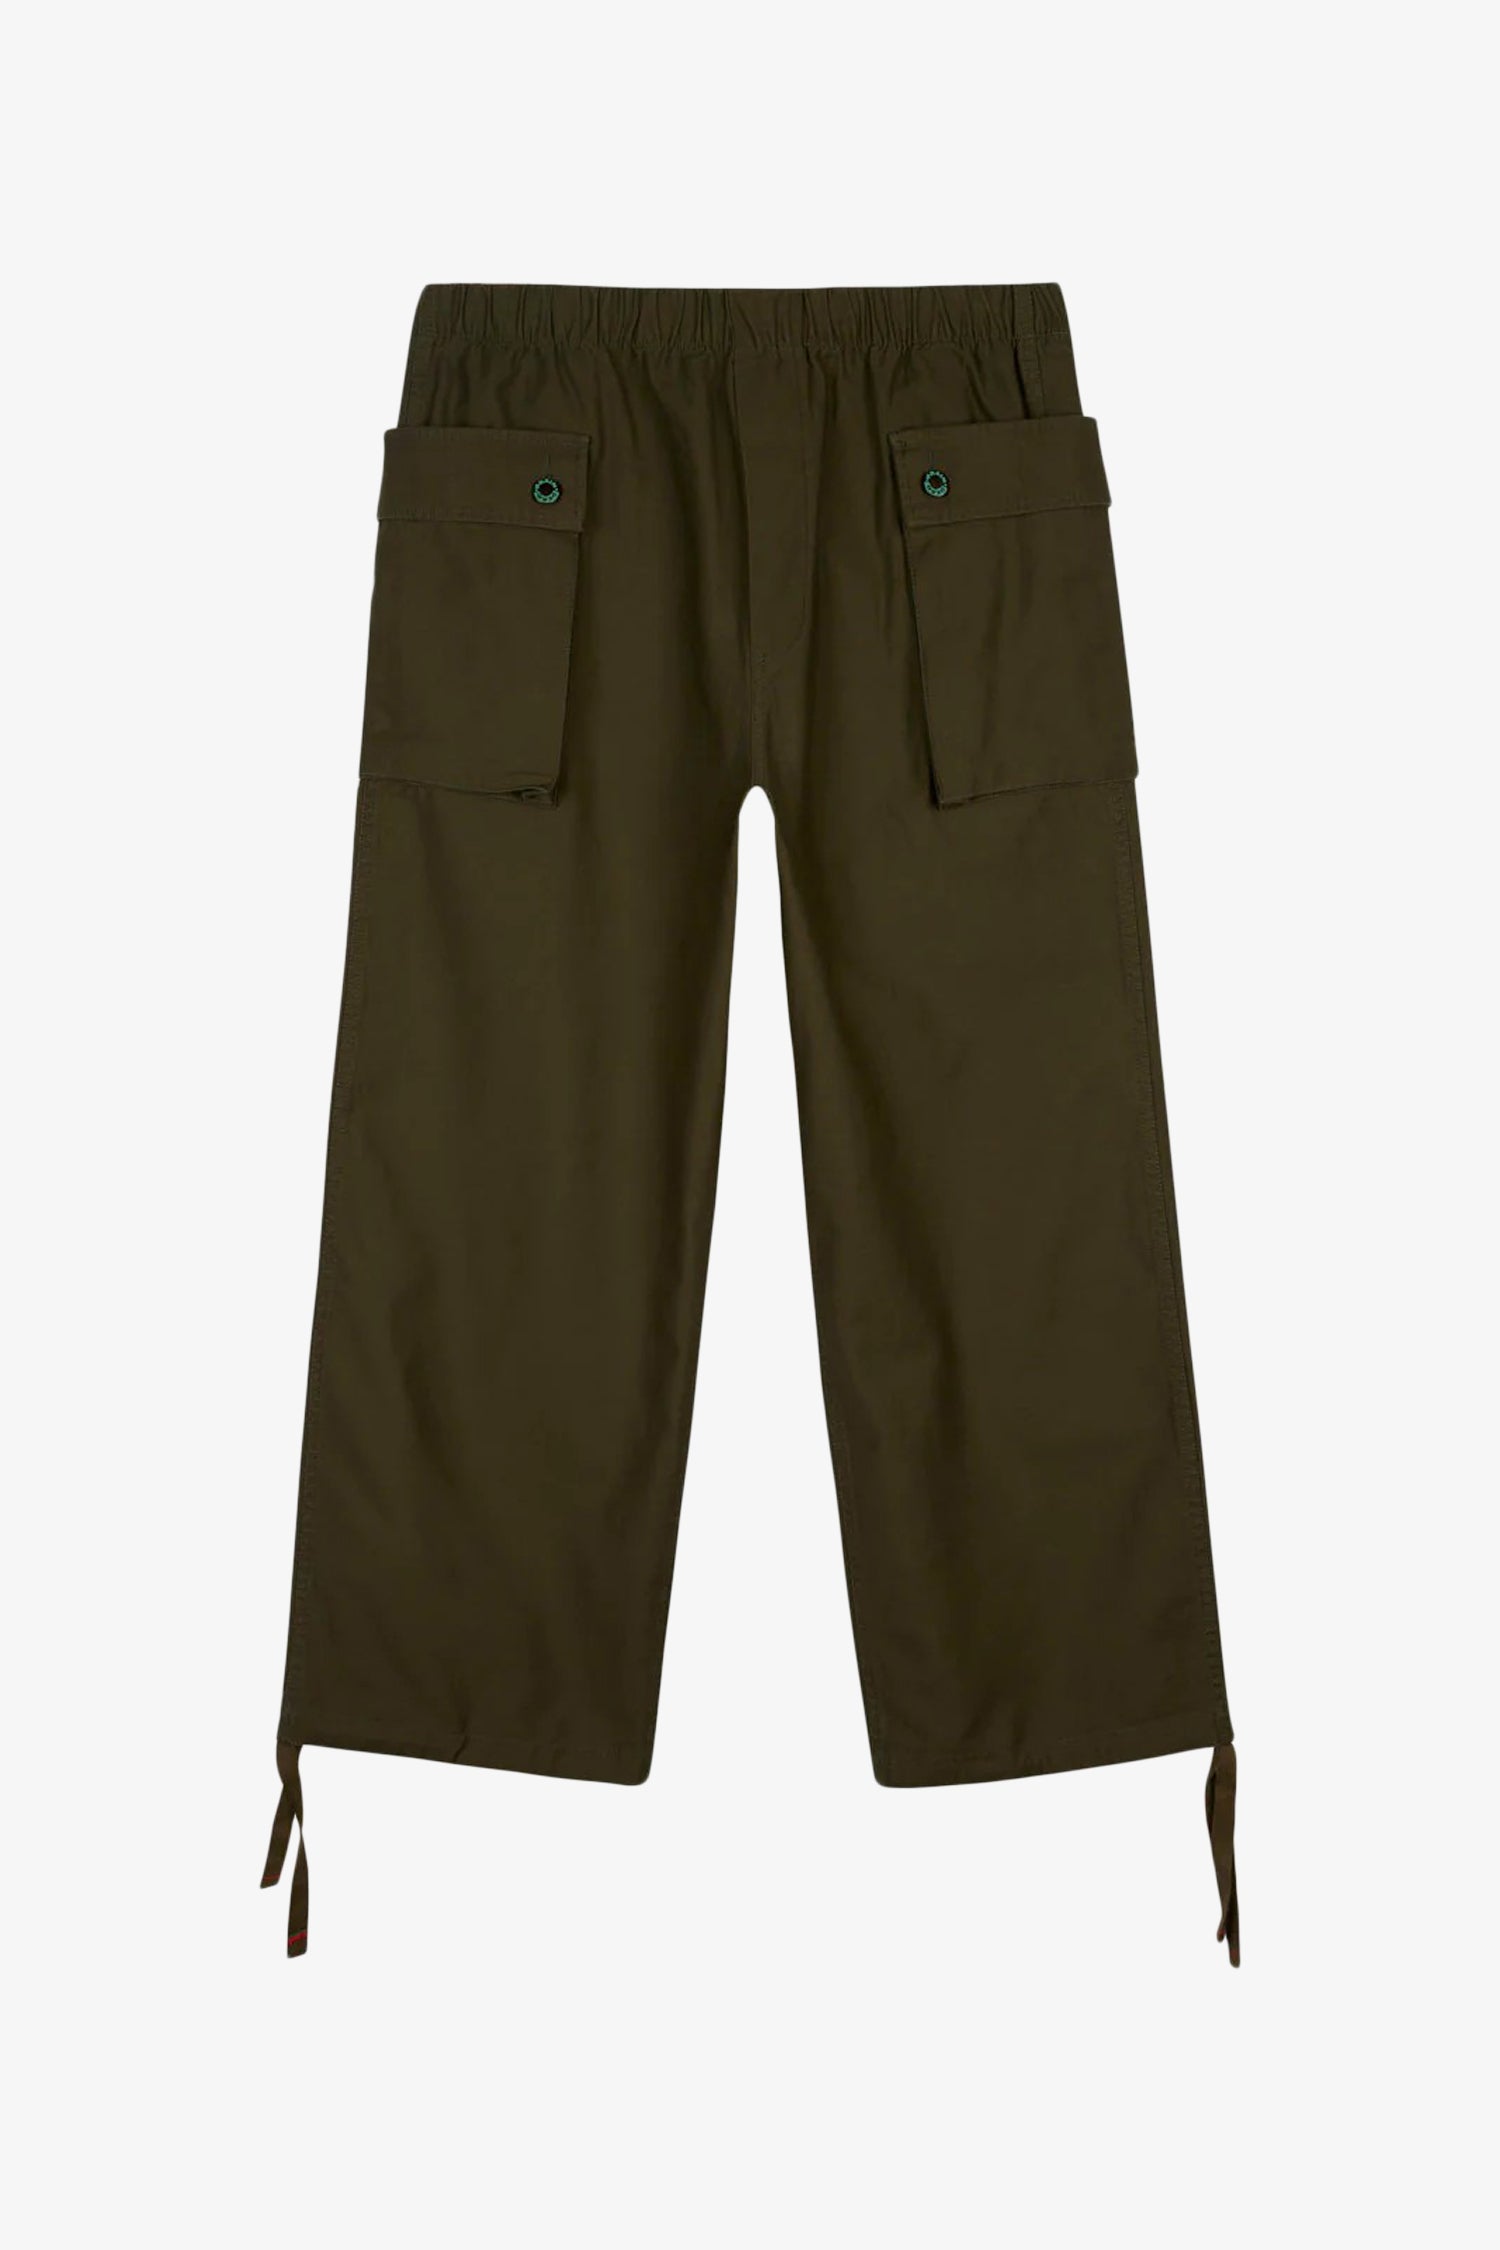 Military Cloth P44 Jungle Pant- Selectshop FRAME